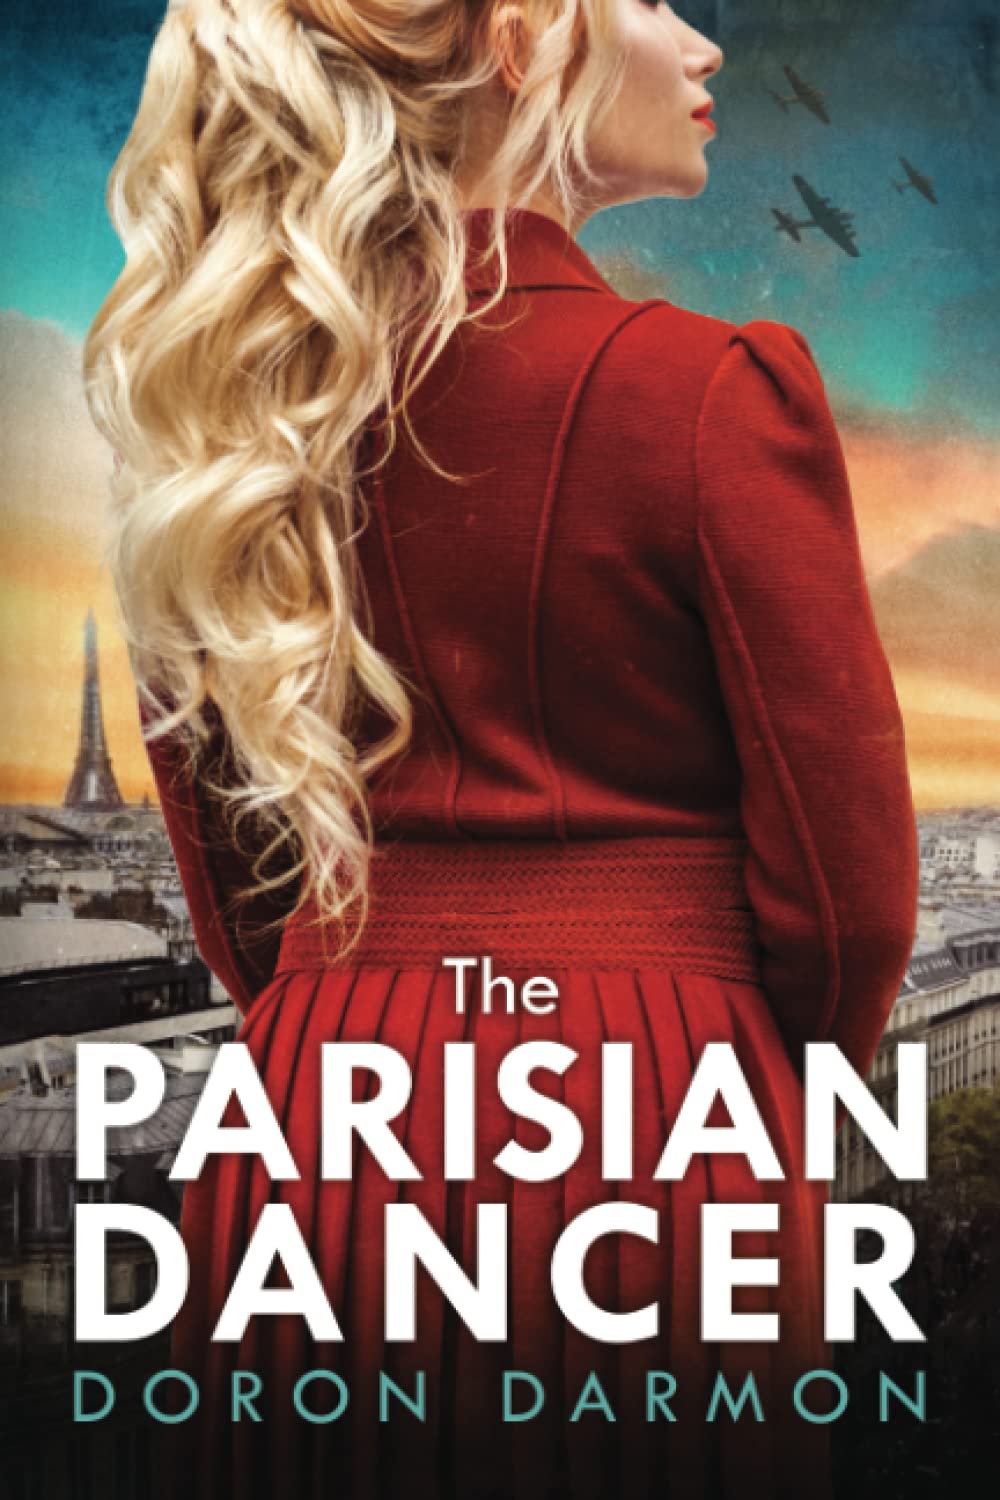 The Parisian Dancer: A WW2 Historical Novel Based on a True Story (World War II Brave Women Fiction)